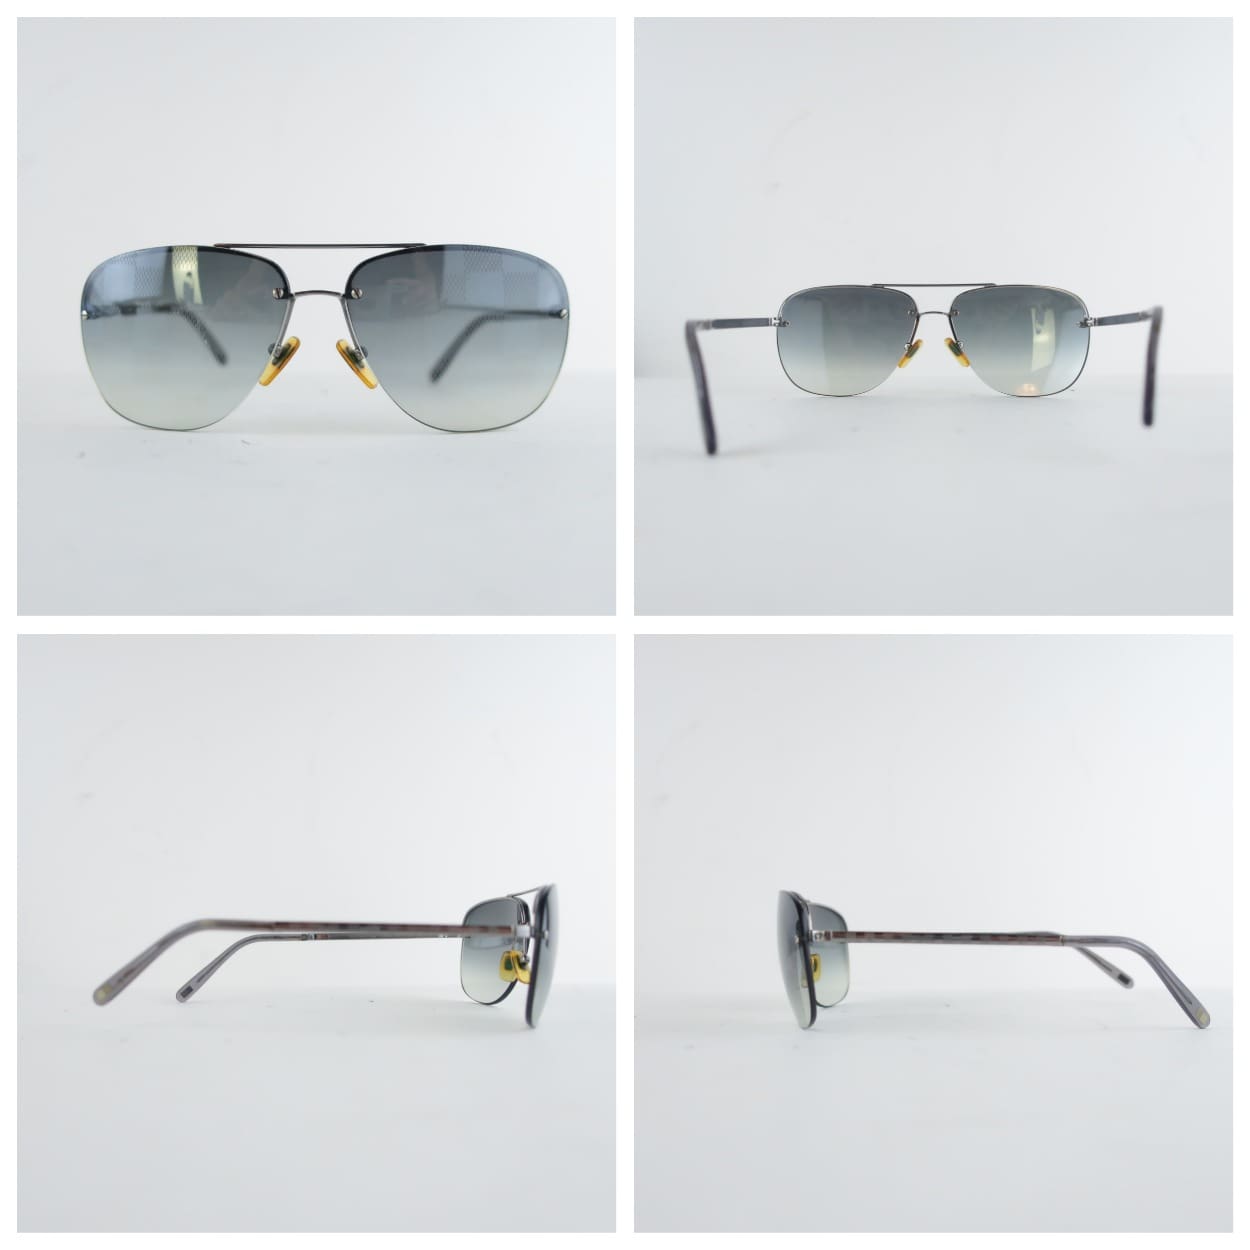 Louis Vuitton Grey Socoa Damier Aviators Sunglasses Sunglasses (649) -  Reetzy